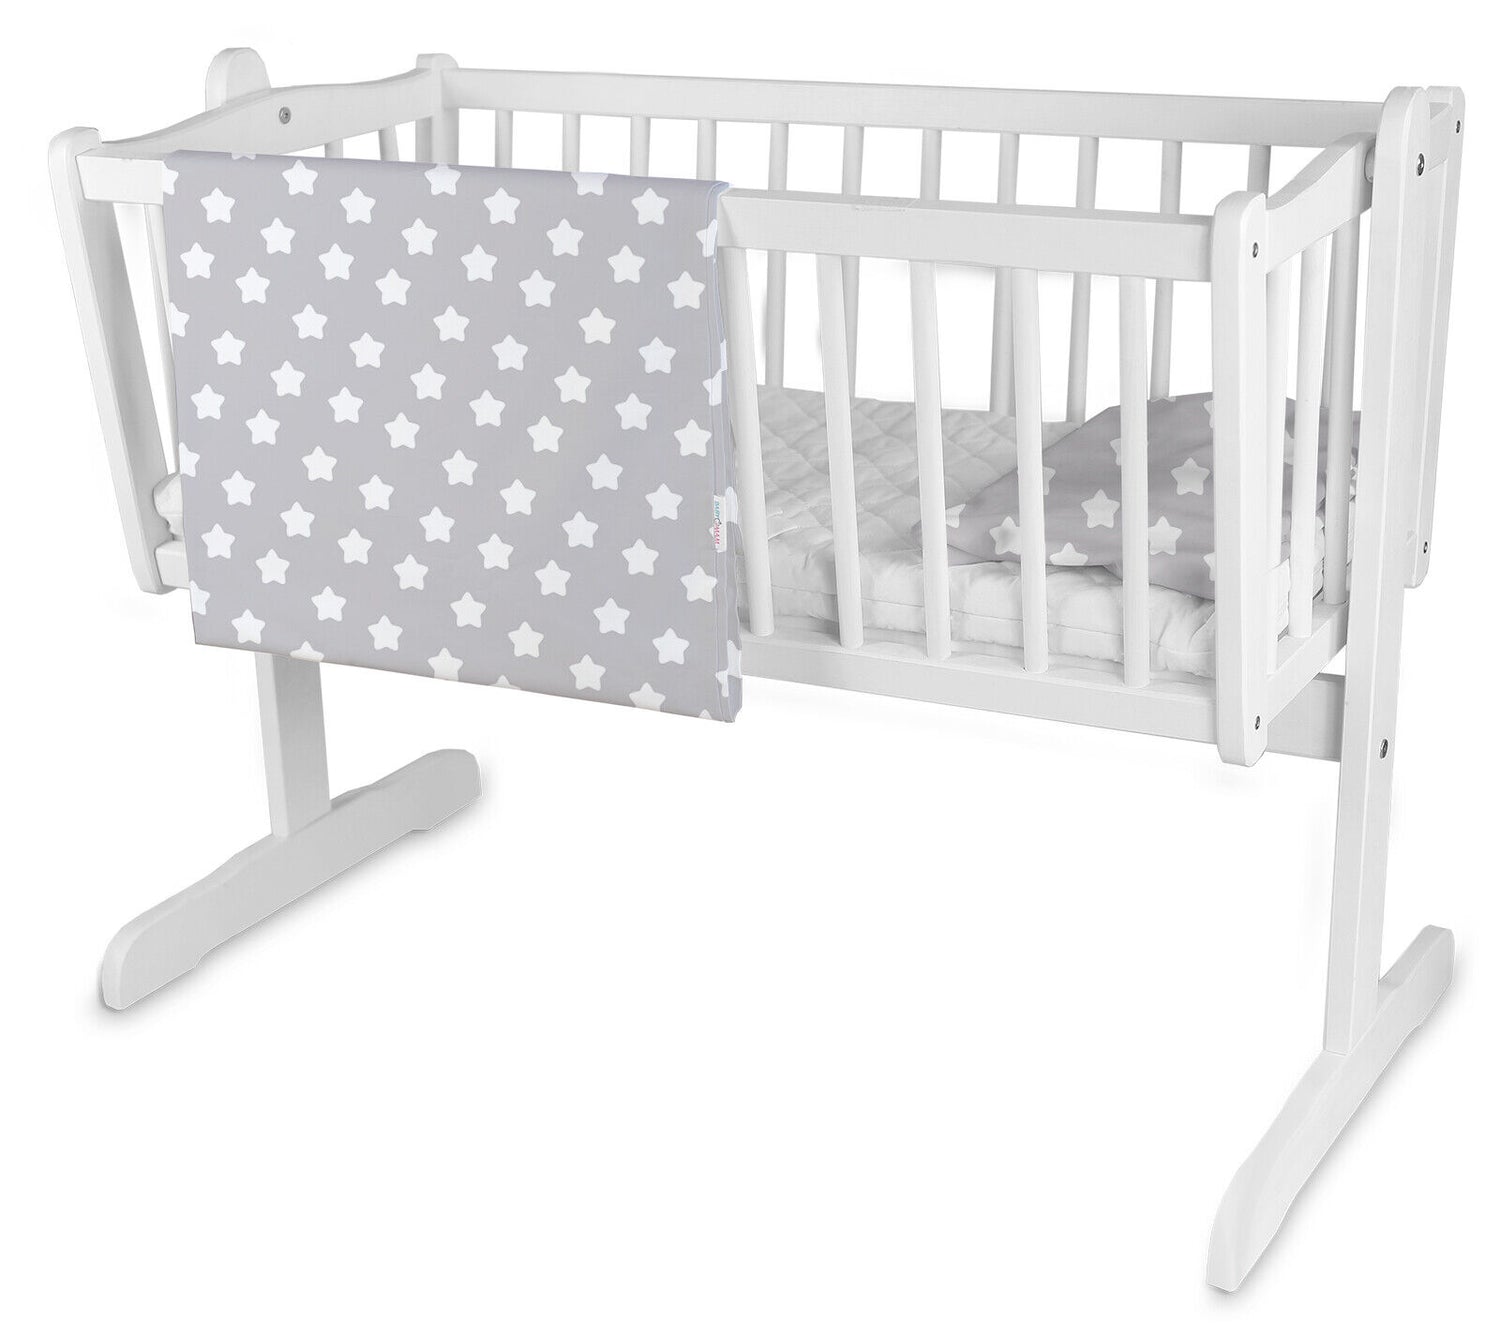 Baby bedding set 5pc nursery cotton pillow duvet bumper 70x80cm Big white stars on grey